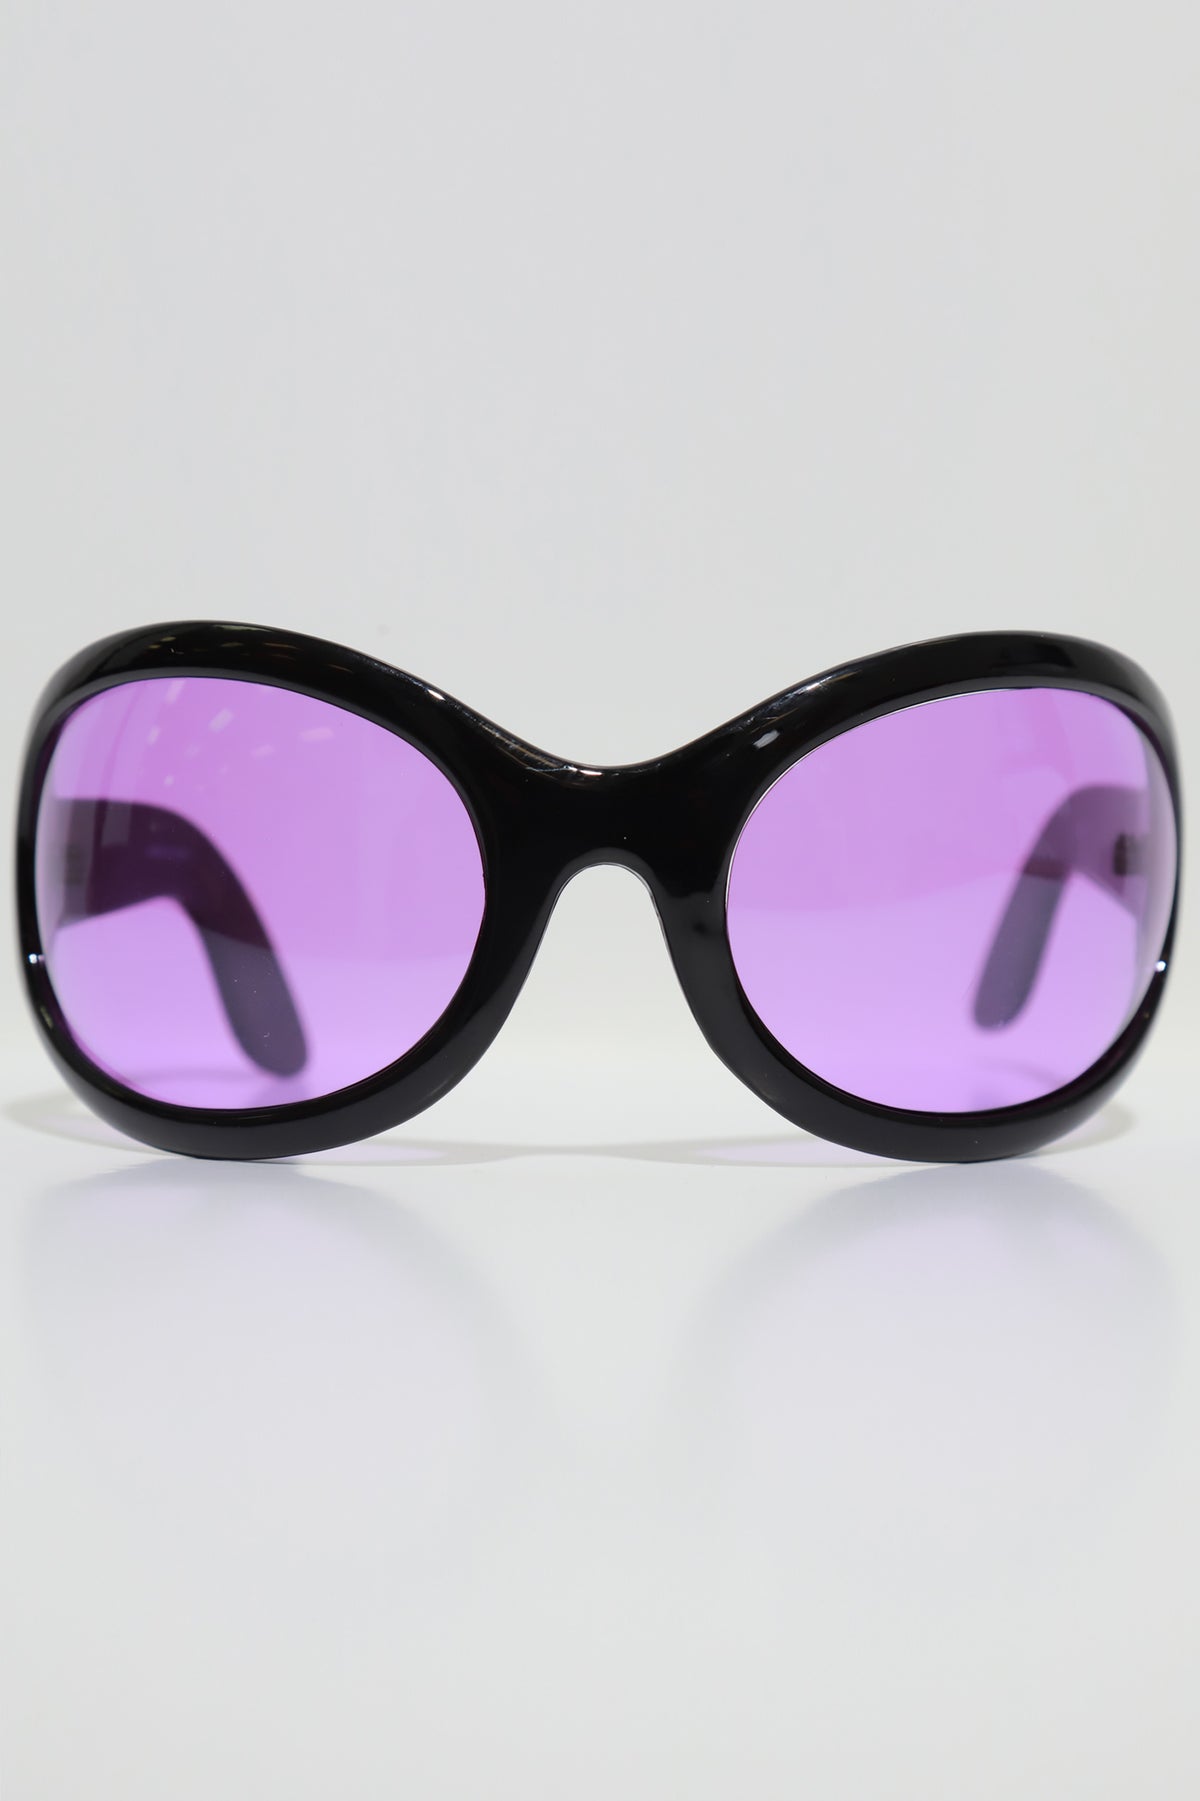 
              Take A Chance Retro Rounded Sunglasses - Black/Purple - Swank A Posh
            